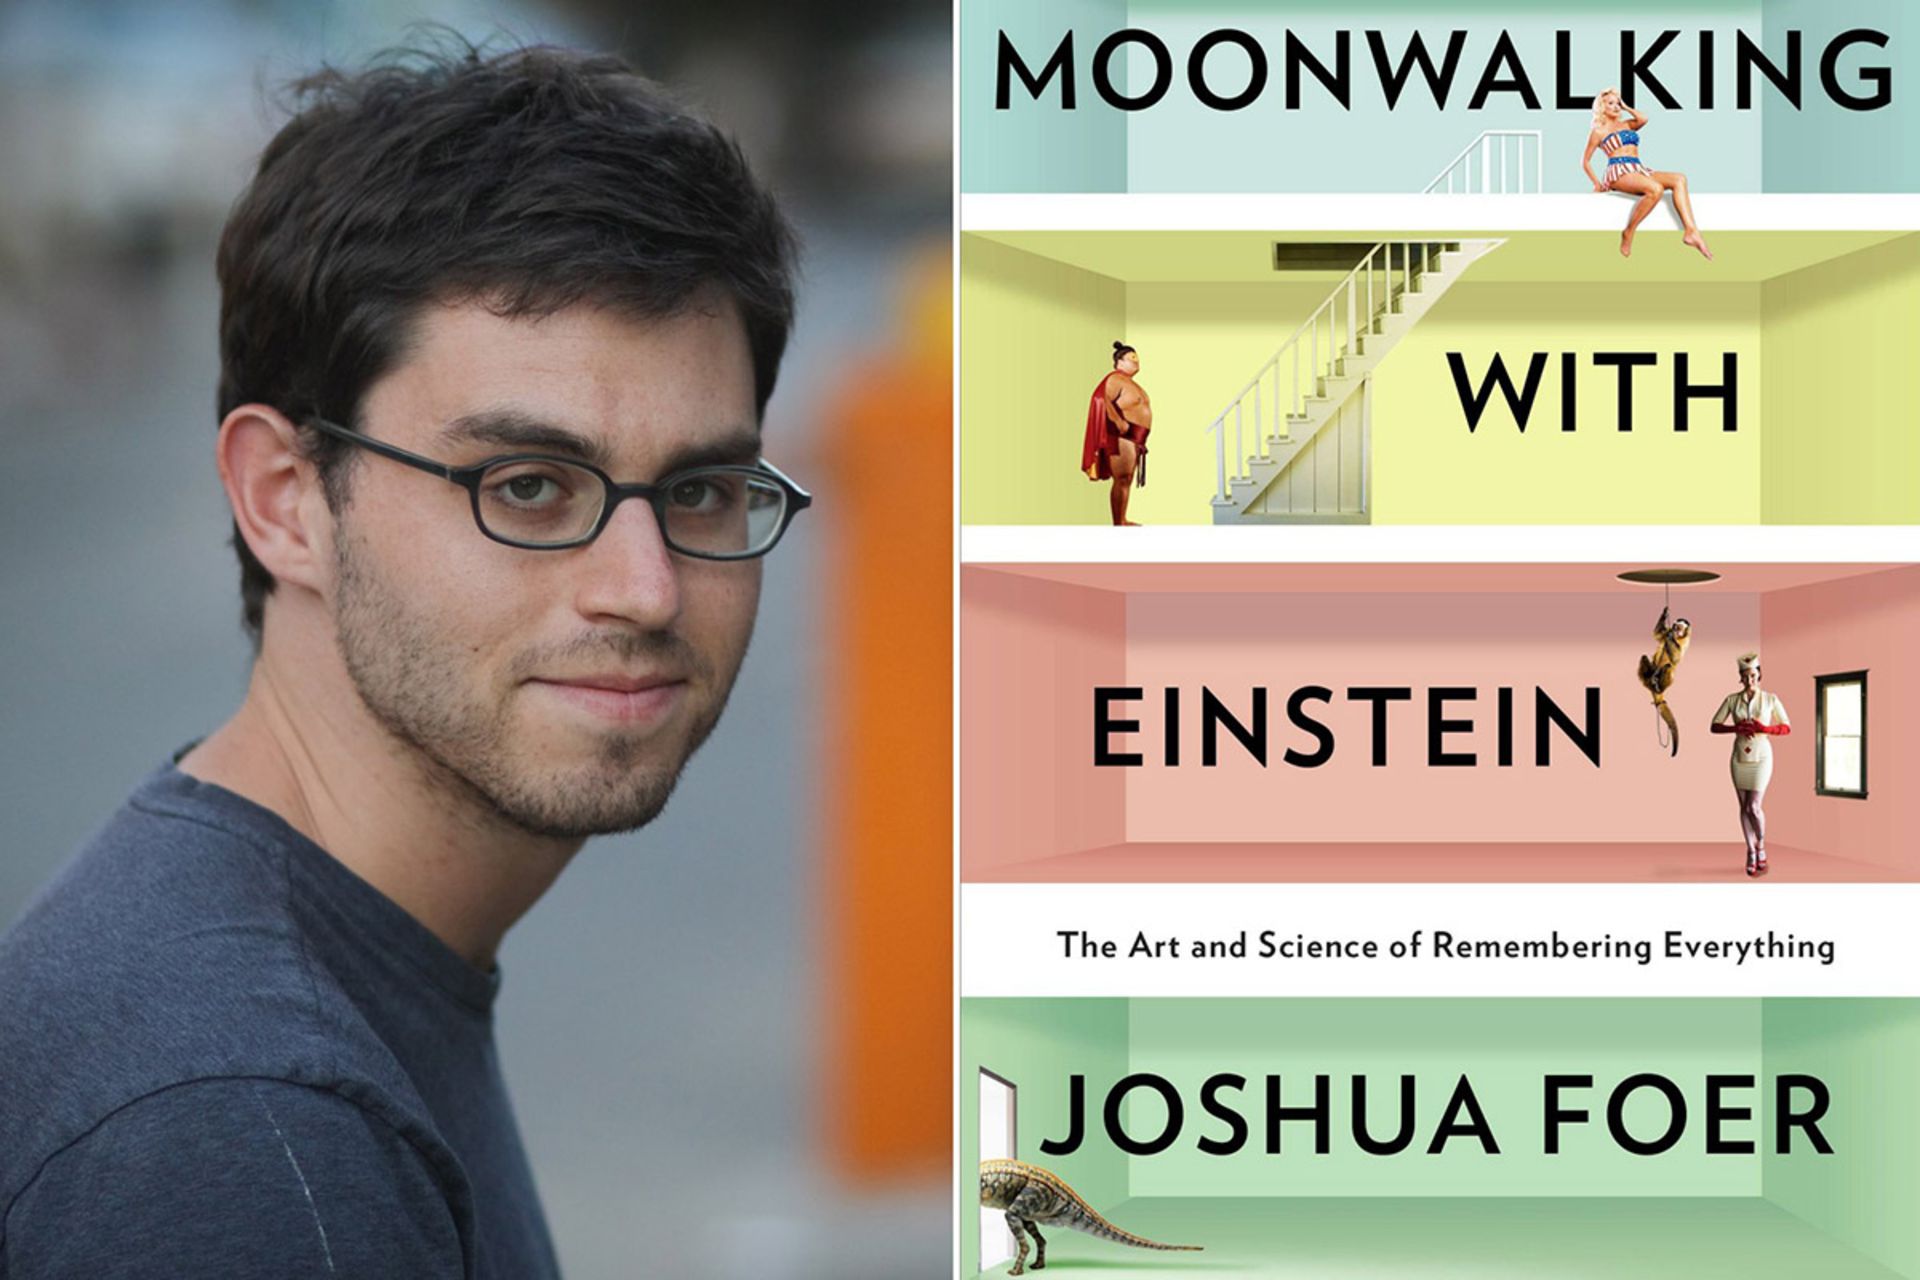 کتاب قدم زدن روی ماه با انیشتین جاشوا فوئر/moonwalking with eistein by joshua foer book